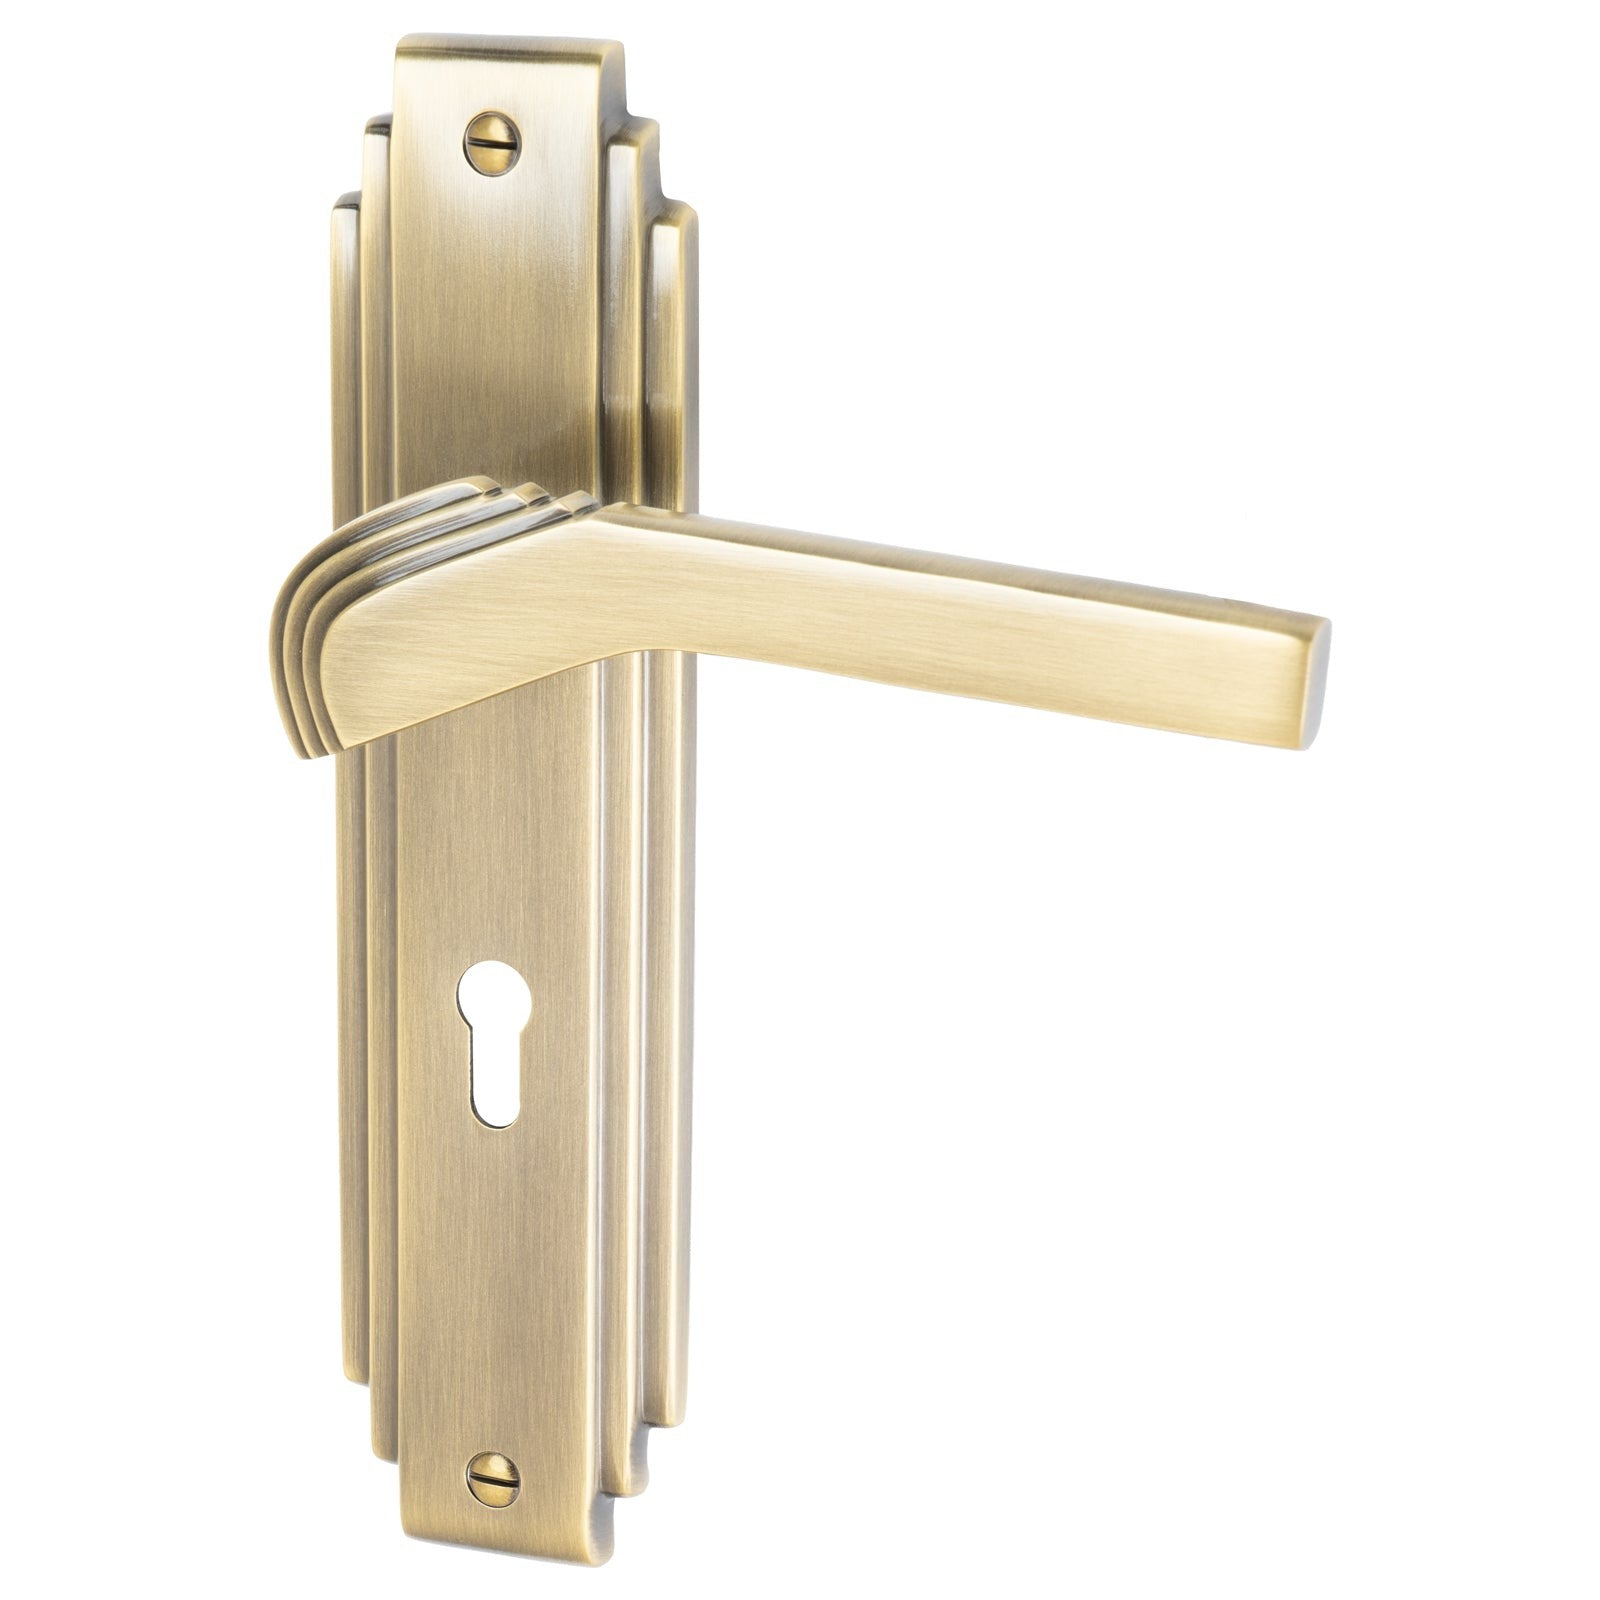 Tiffany Door Handles On Plate Lock Handle in Aged Brass 